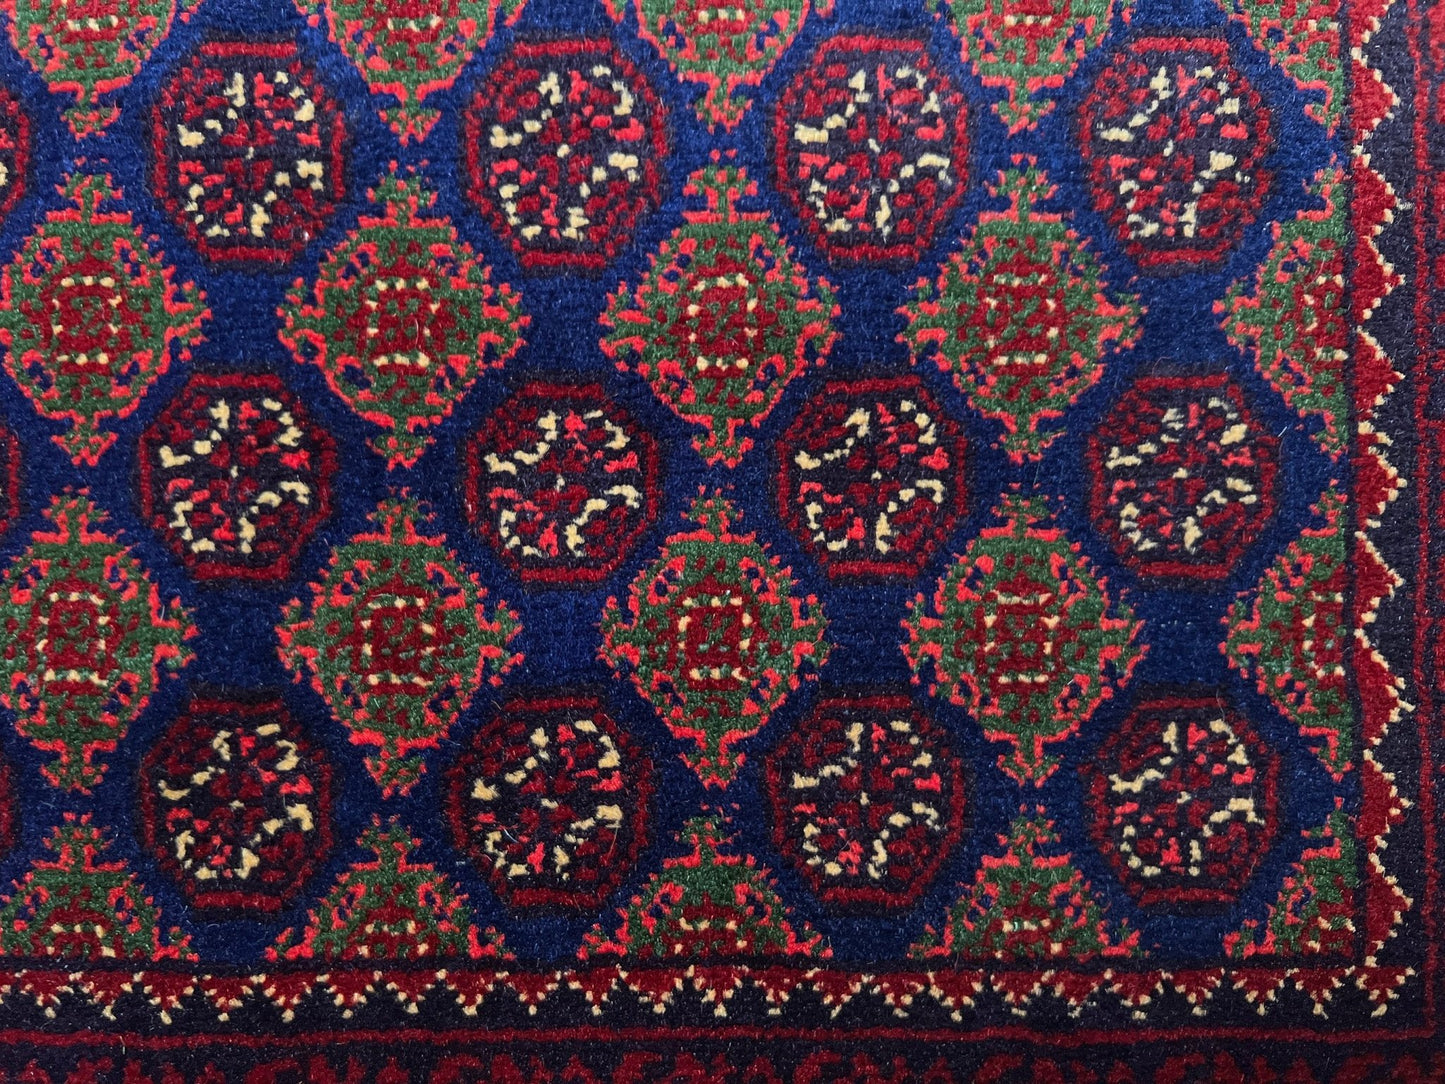 Burgundy navy Khoja Roshnai fine handmade area rug shop palo alto. Oriental rug shop san francisco bay area. Luxury rug from afghanistan